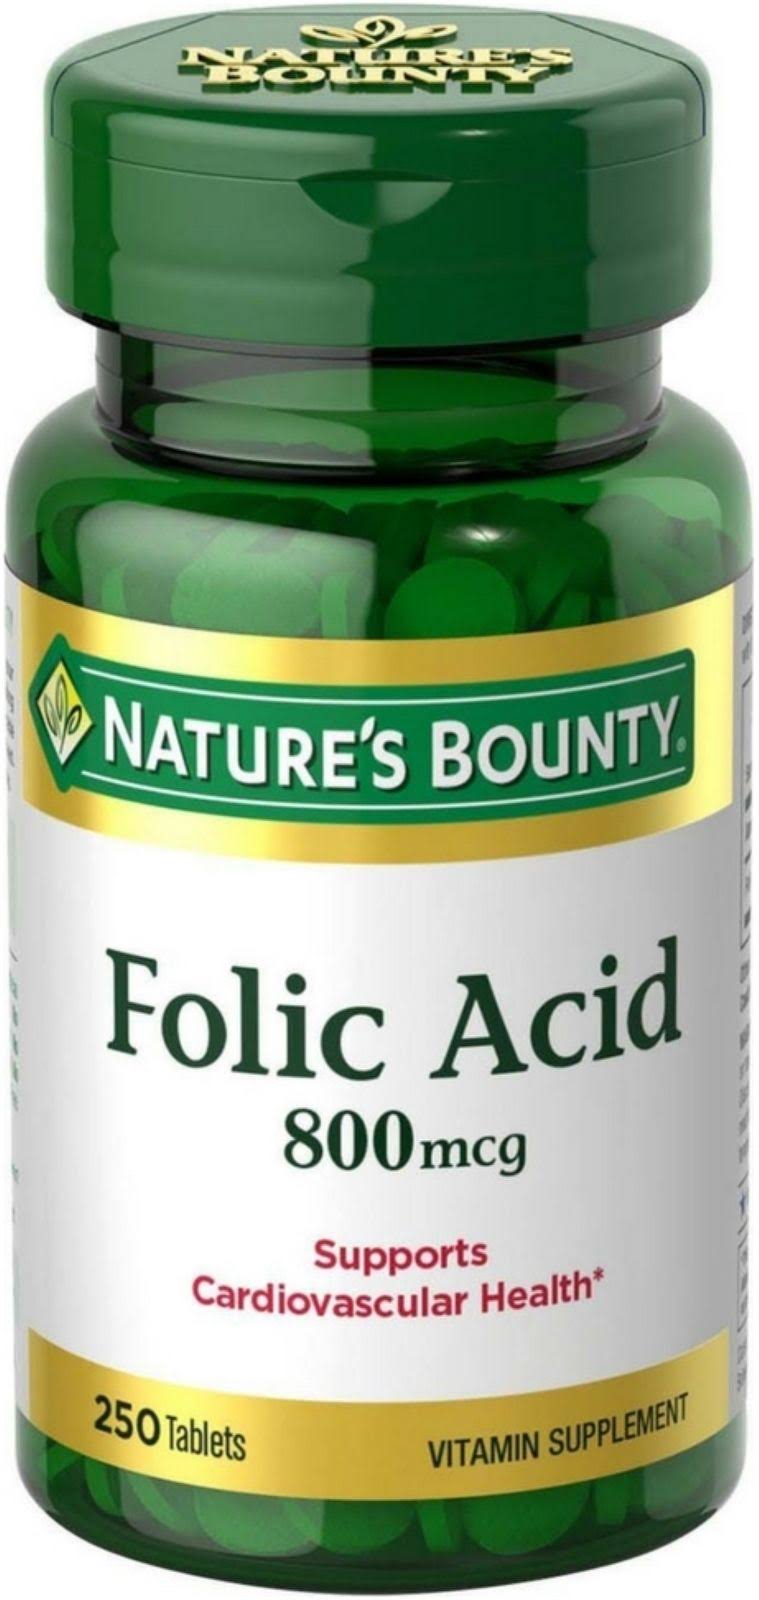 Nature's Bounty Folic Acid Tablets - 800mcg, x250